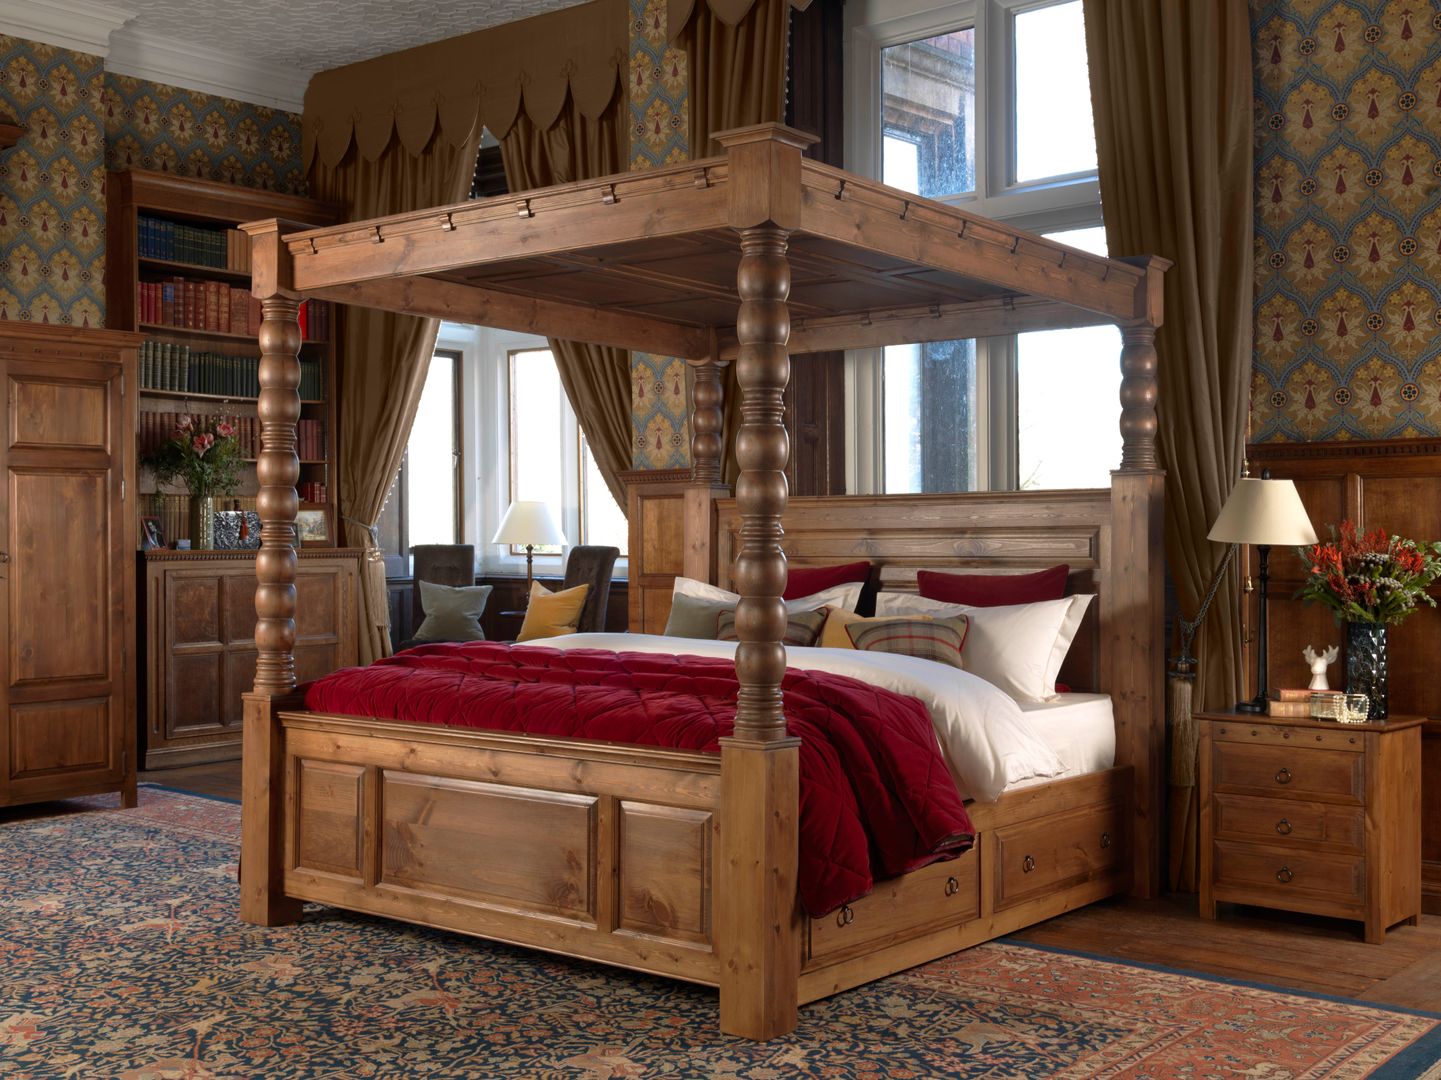 The Ambassador Four Poster Bed Revival Beds クラシカルスタイルの 寝室 ベッド＆ヘッドボード